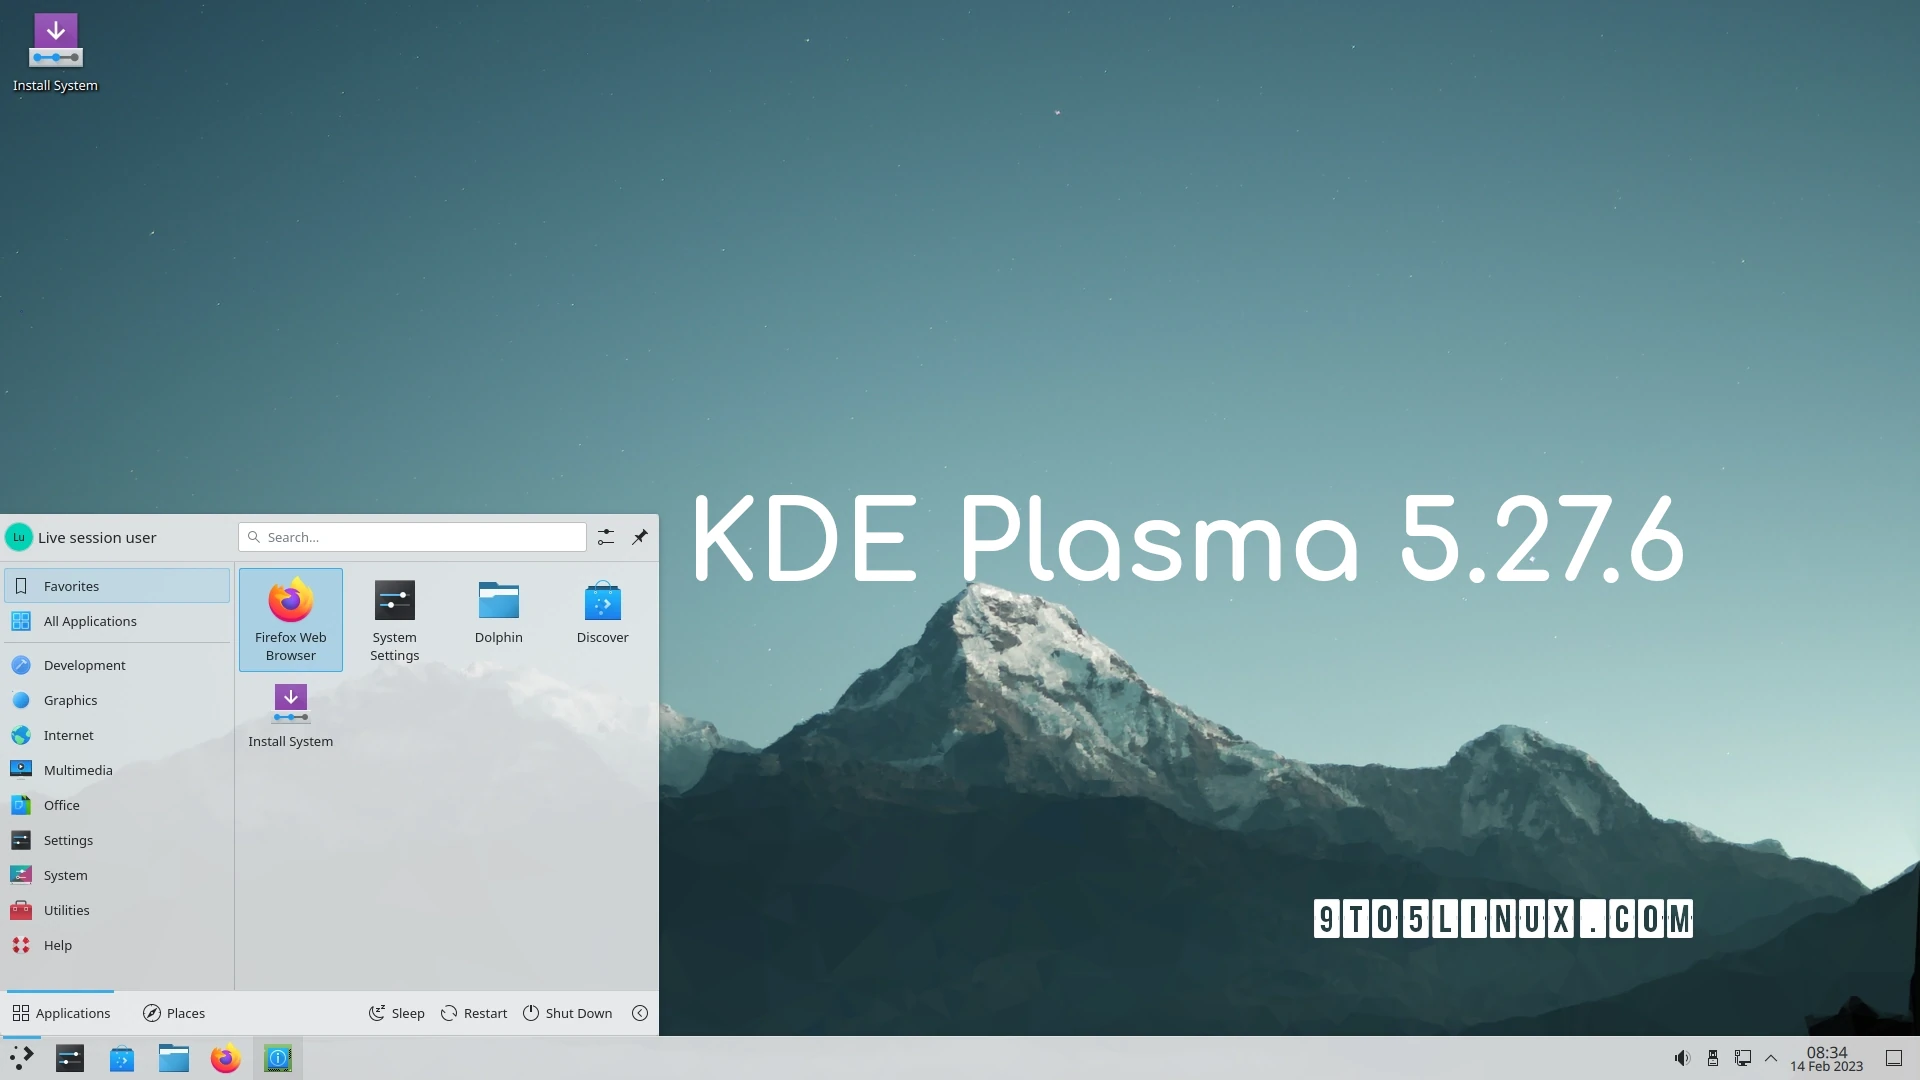 KDE Plasma 5.27.6 Is Out to Improve Plasma Wayland Session, Support for Flatpak Apps